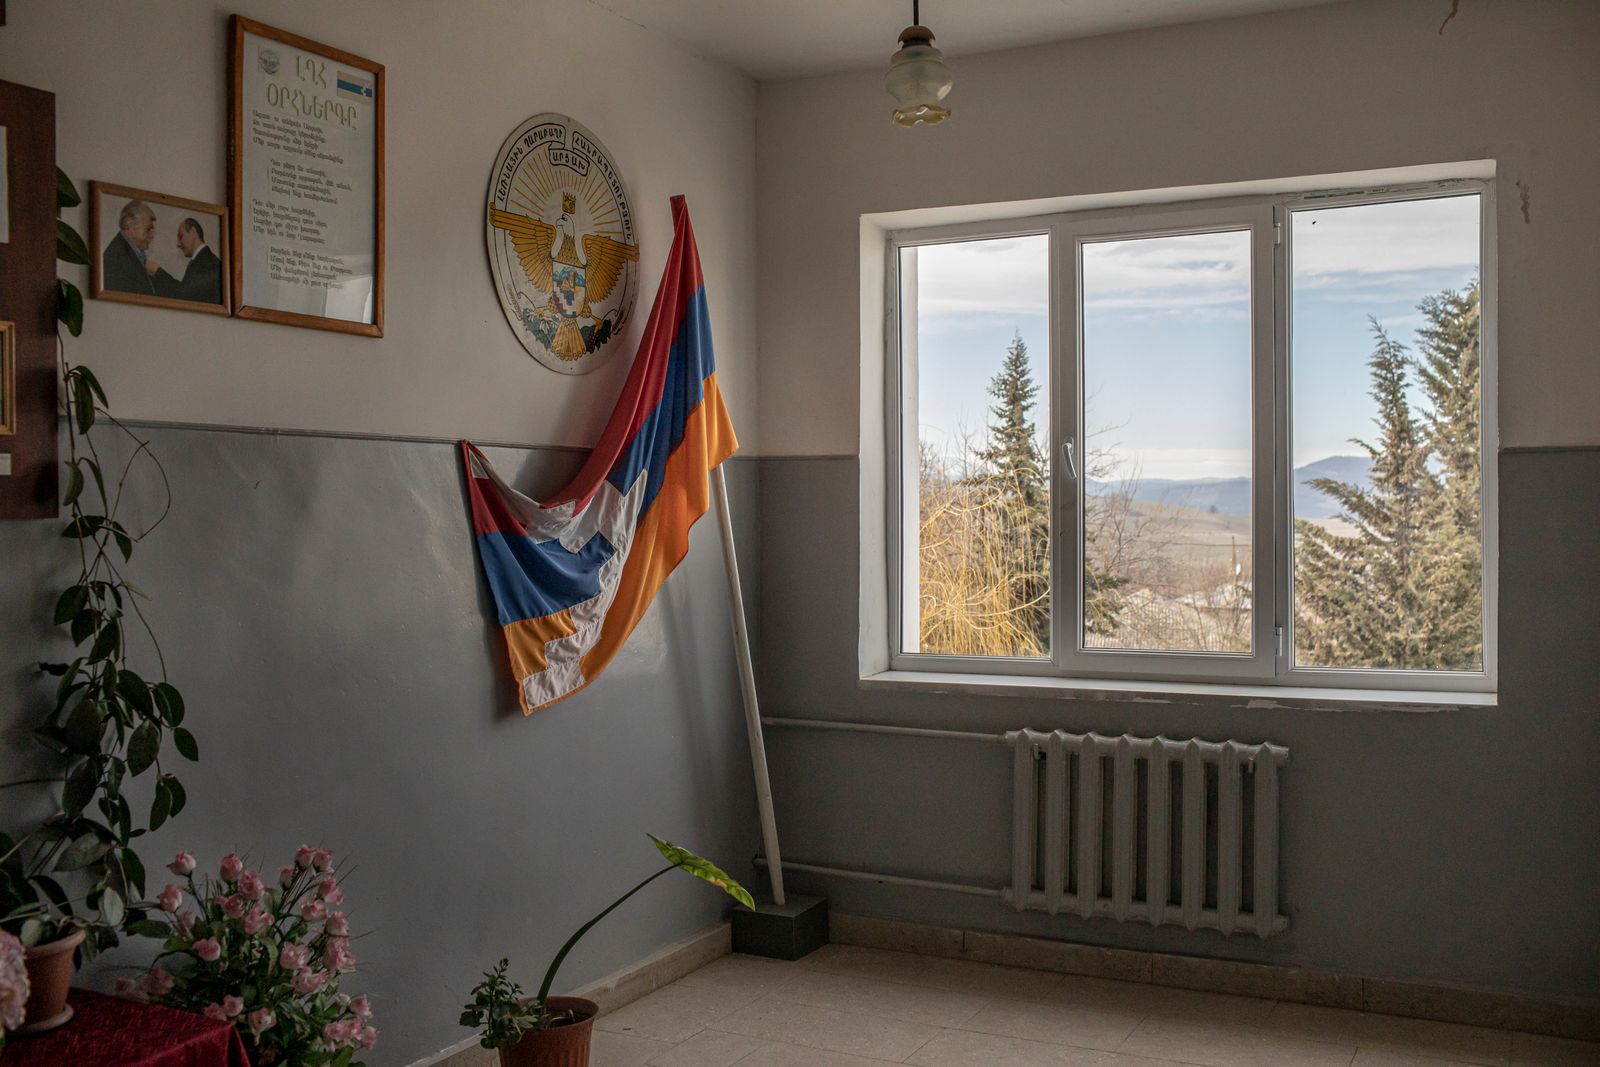 © Anush Babajanyan - The flag of Nagorno Karabakh is seen in the hallway of the Shekher village school, on February 28, 2020.